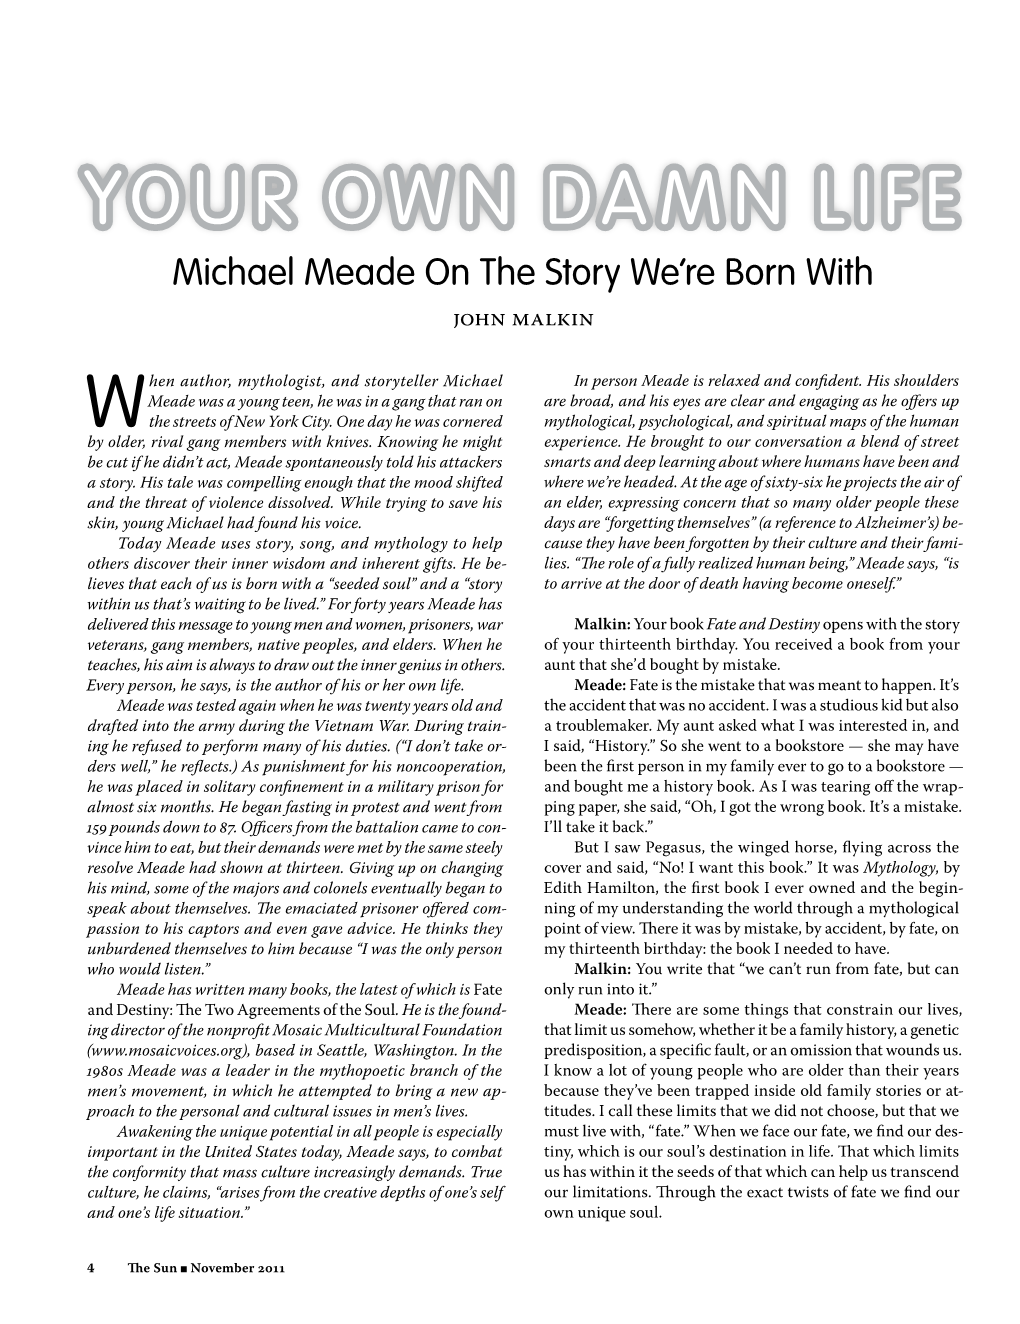 Read the Sun Magazine's Story Your Own Damn Life